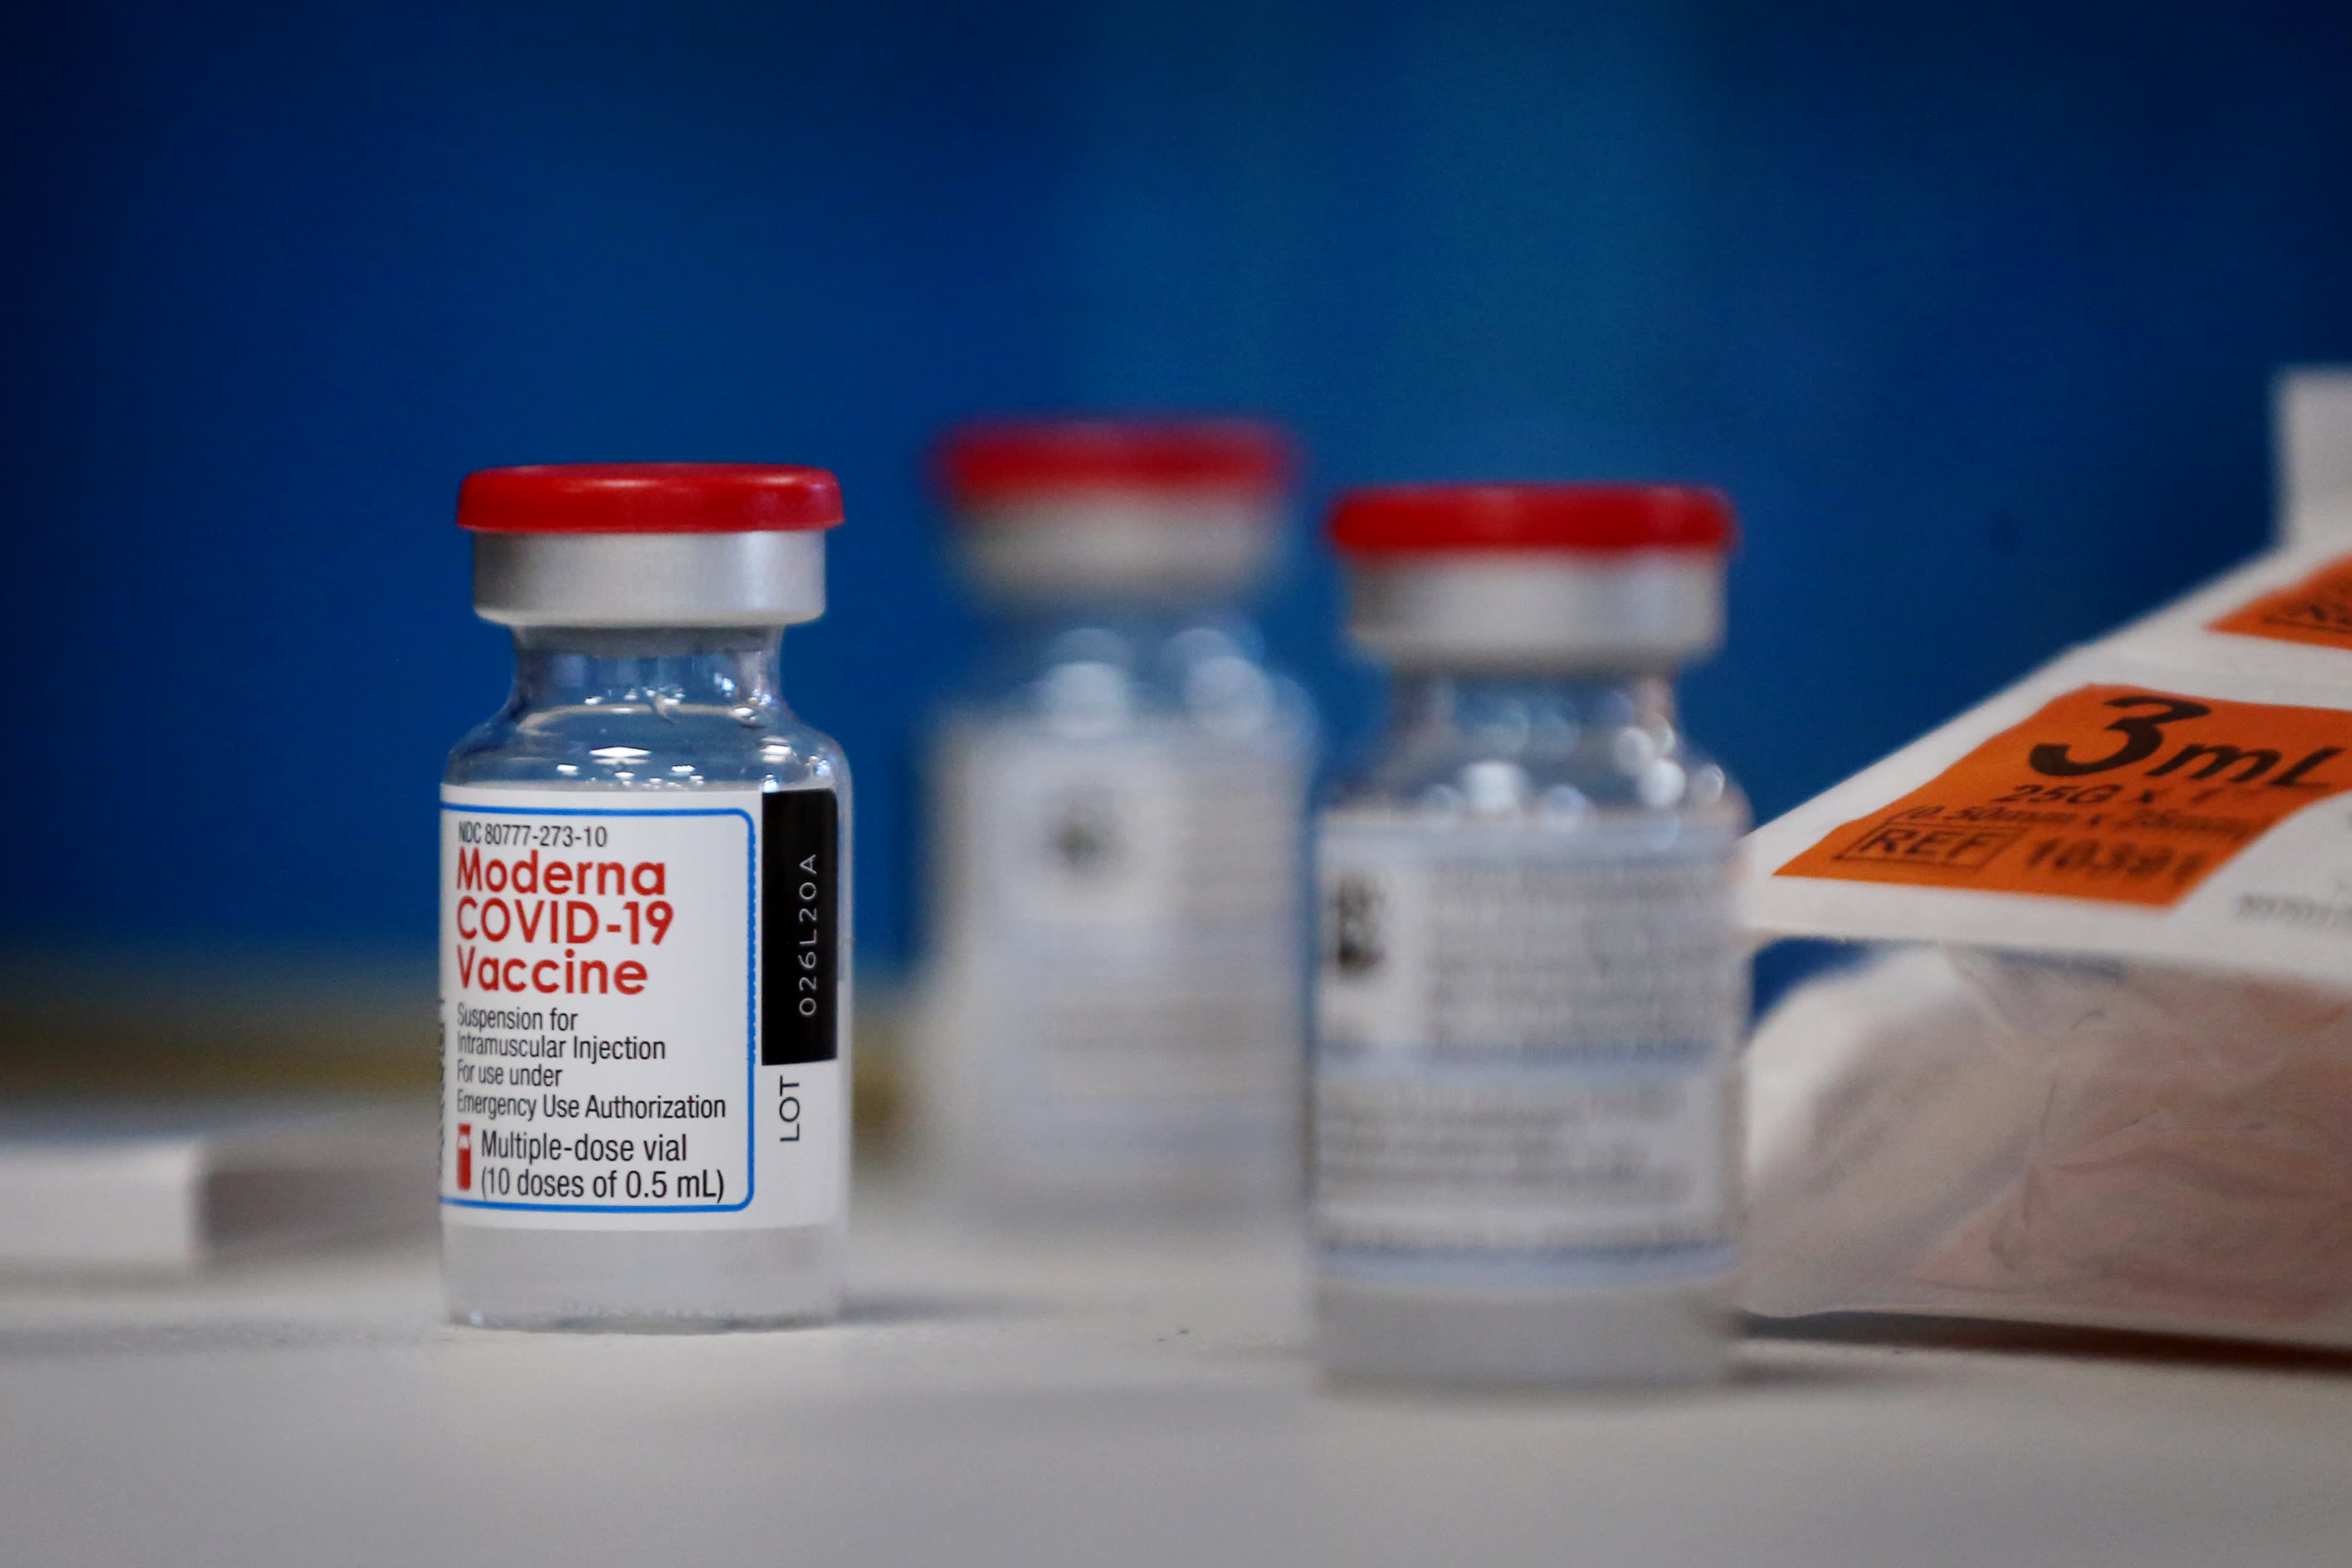 European regulator approves Modern Covid vaccine for use in EU